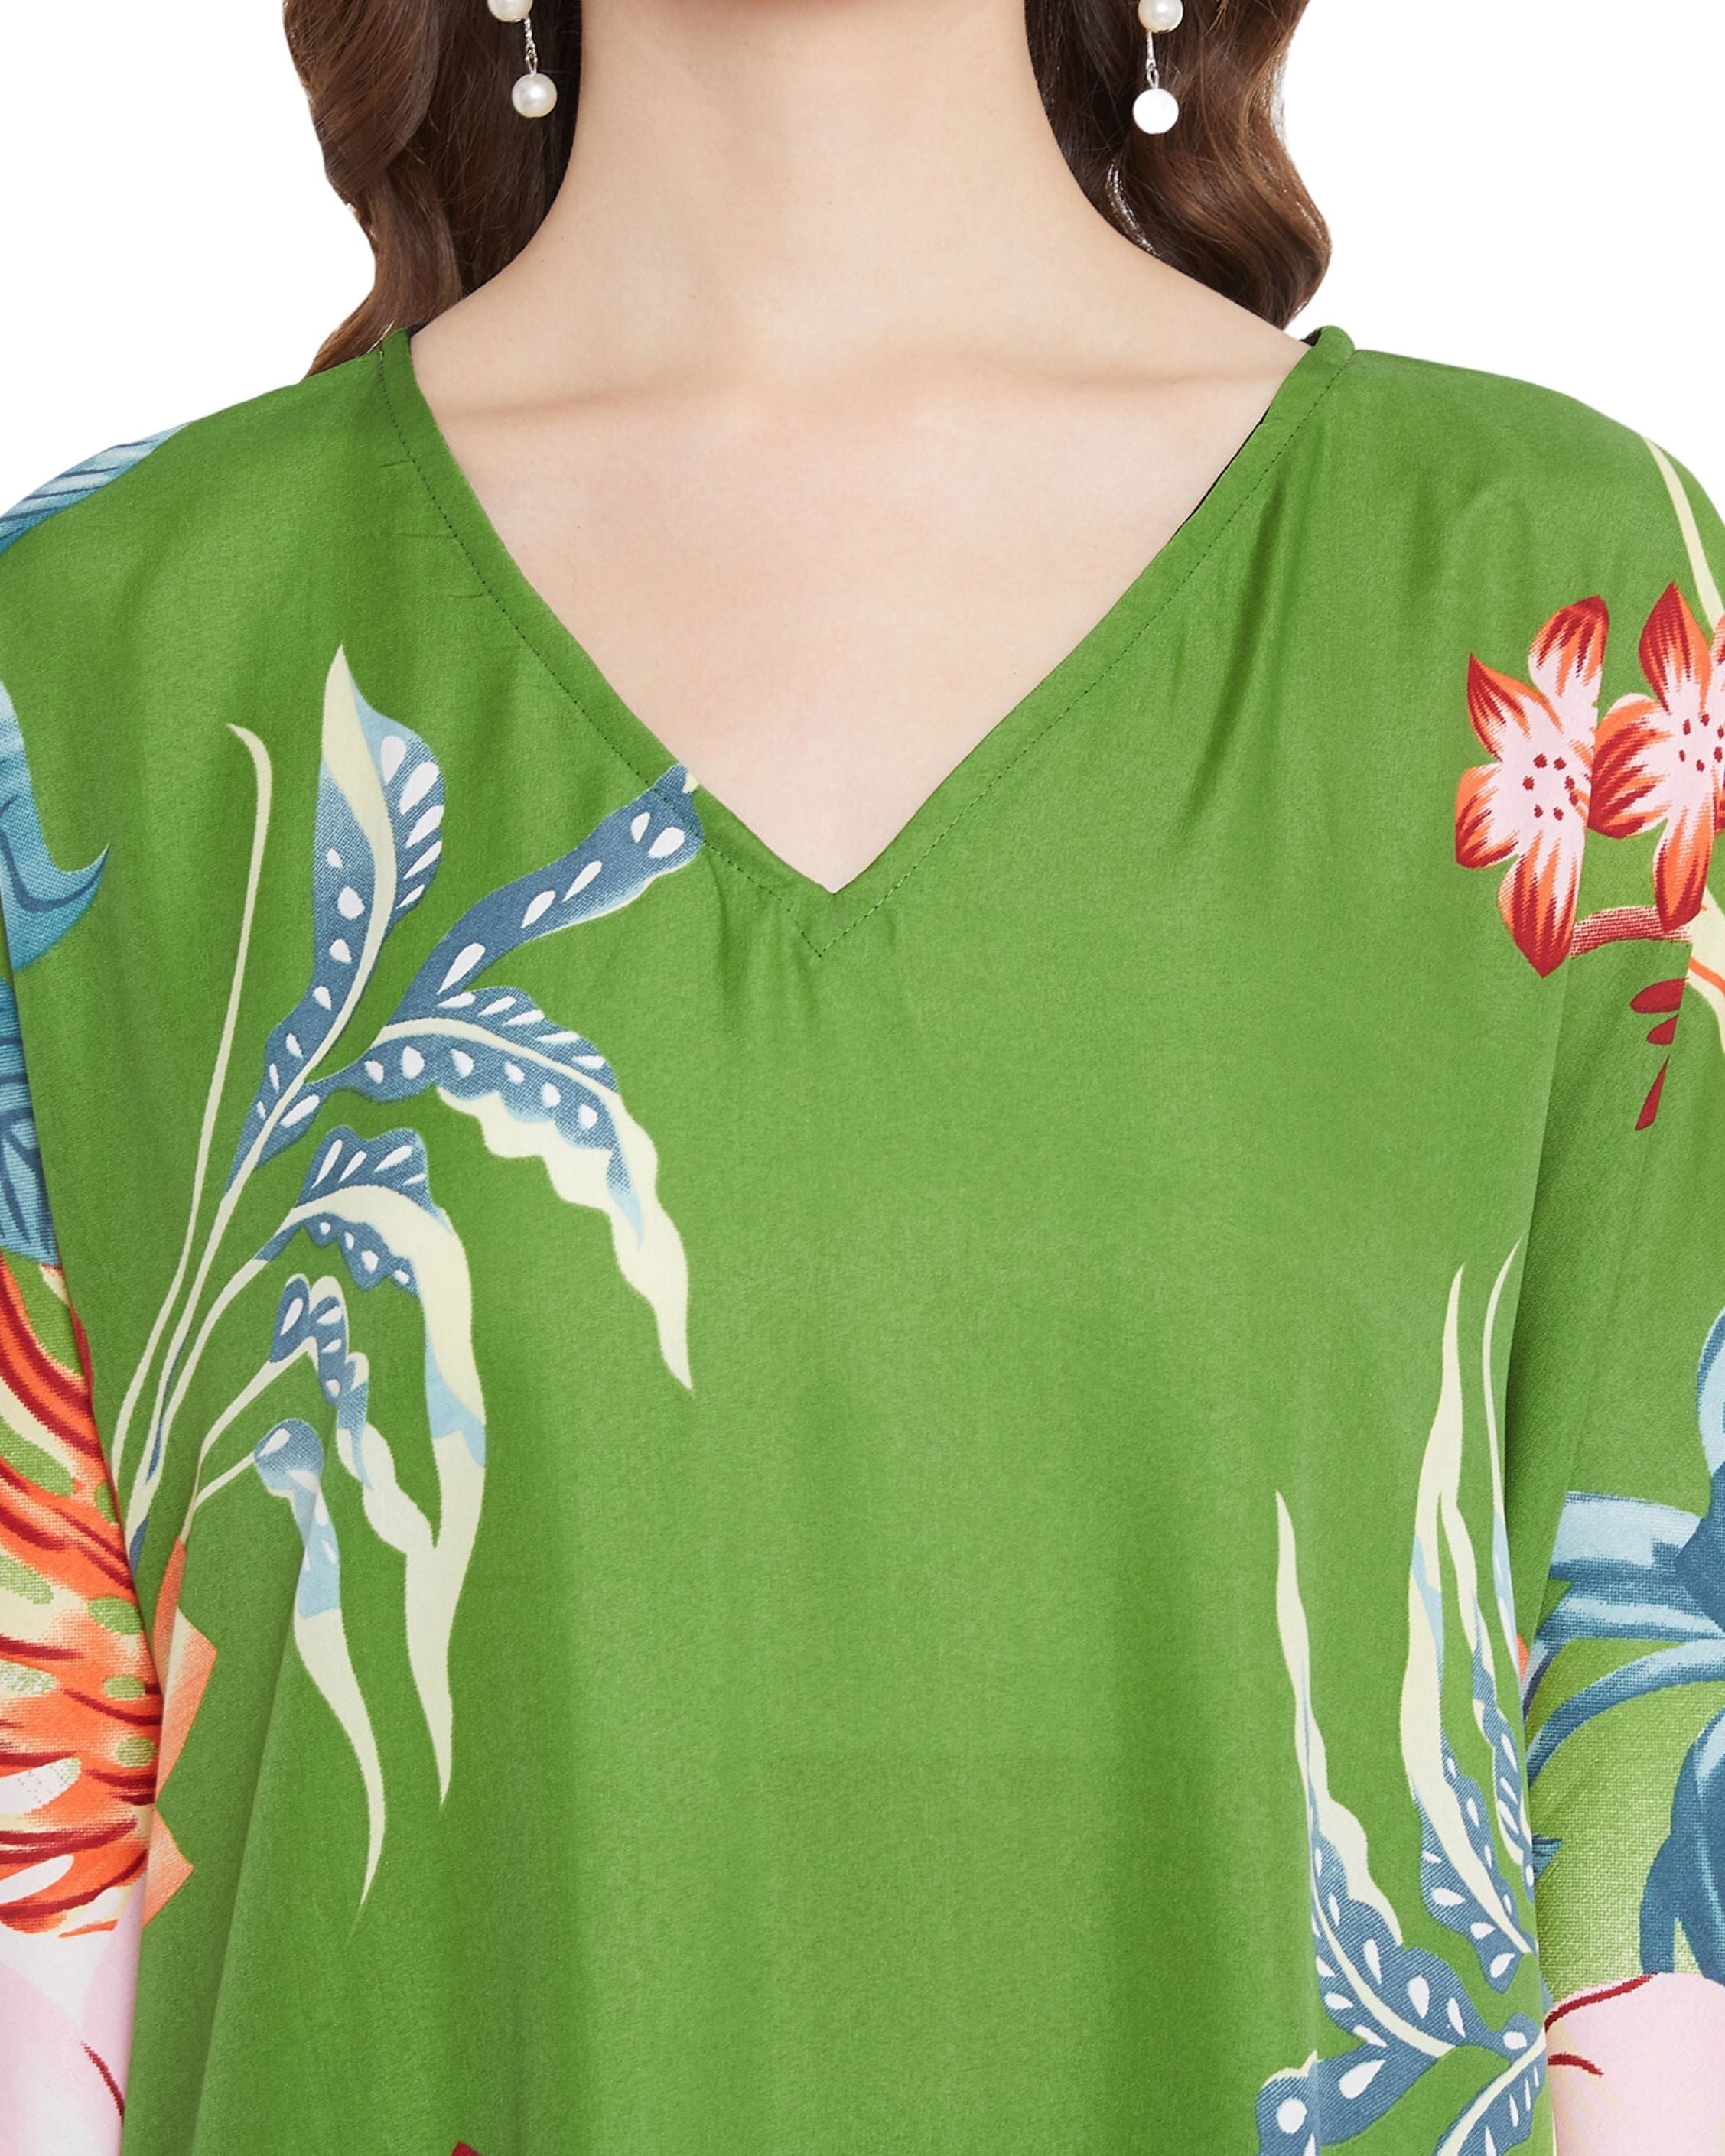 Floral Printed Green Polyester Kaftan Dress for Women